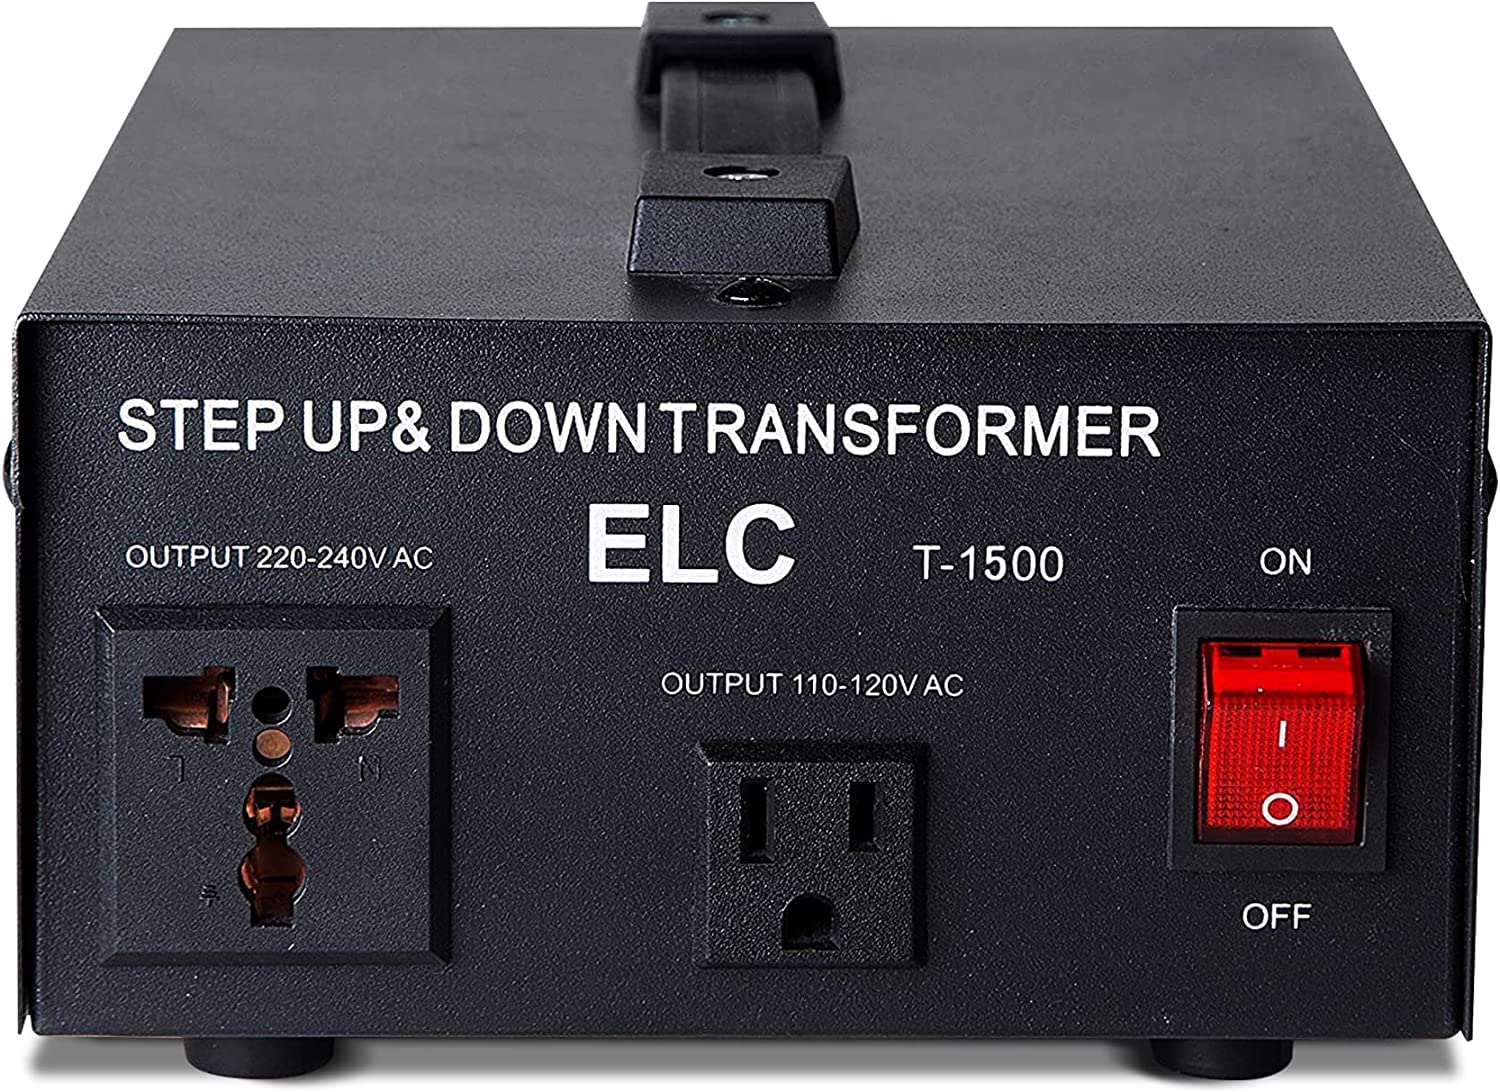 ELC T Series 1500 Watt Voltage Converter Transformer - Step Up/Down - 110v to 220v / 220v to 110v Power Converter - Circuit Breaker Protection, CE Certified [3-Years Warranty]